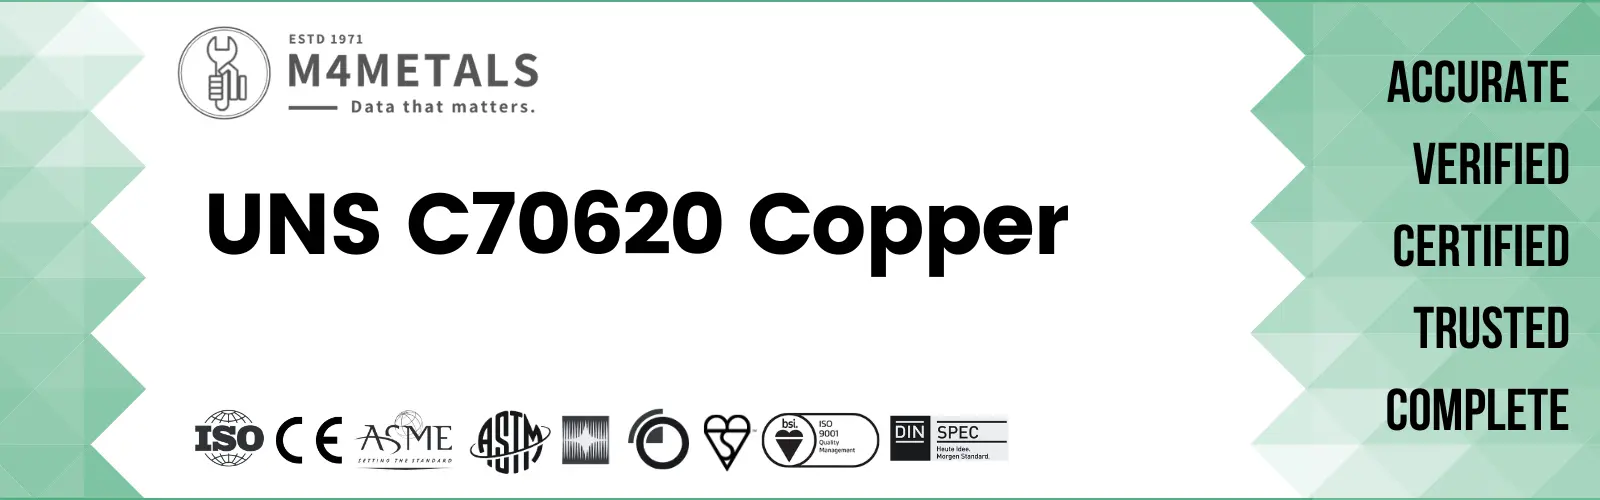 UNS C70620 Copper